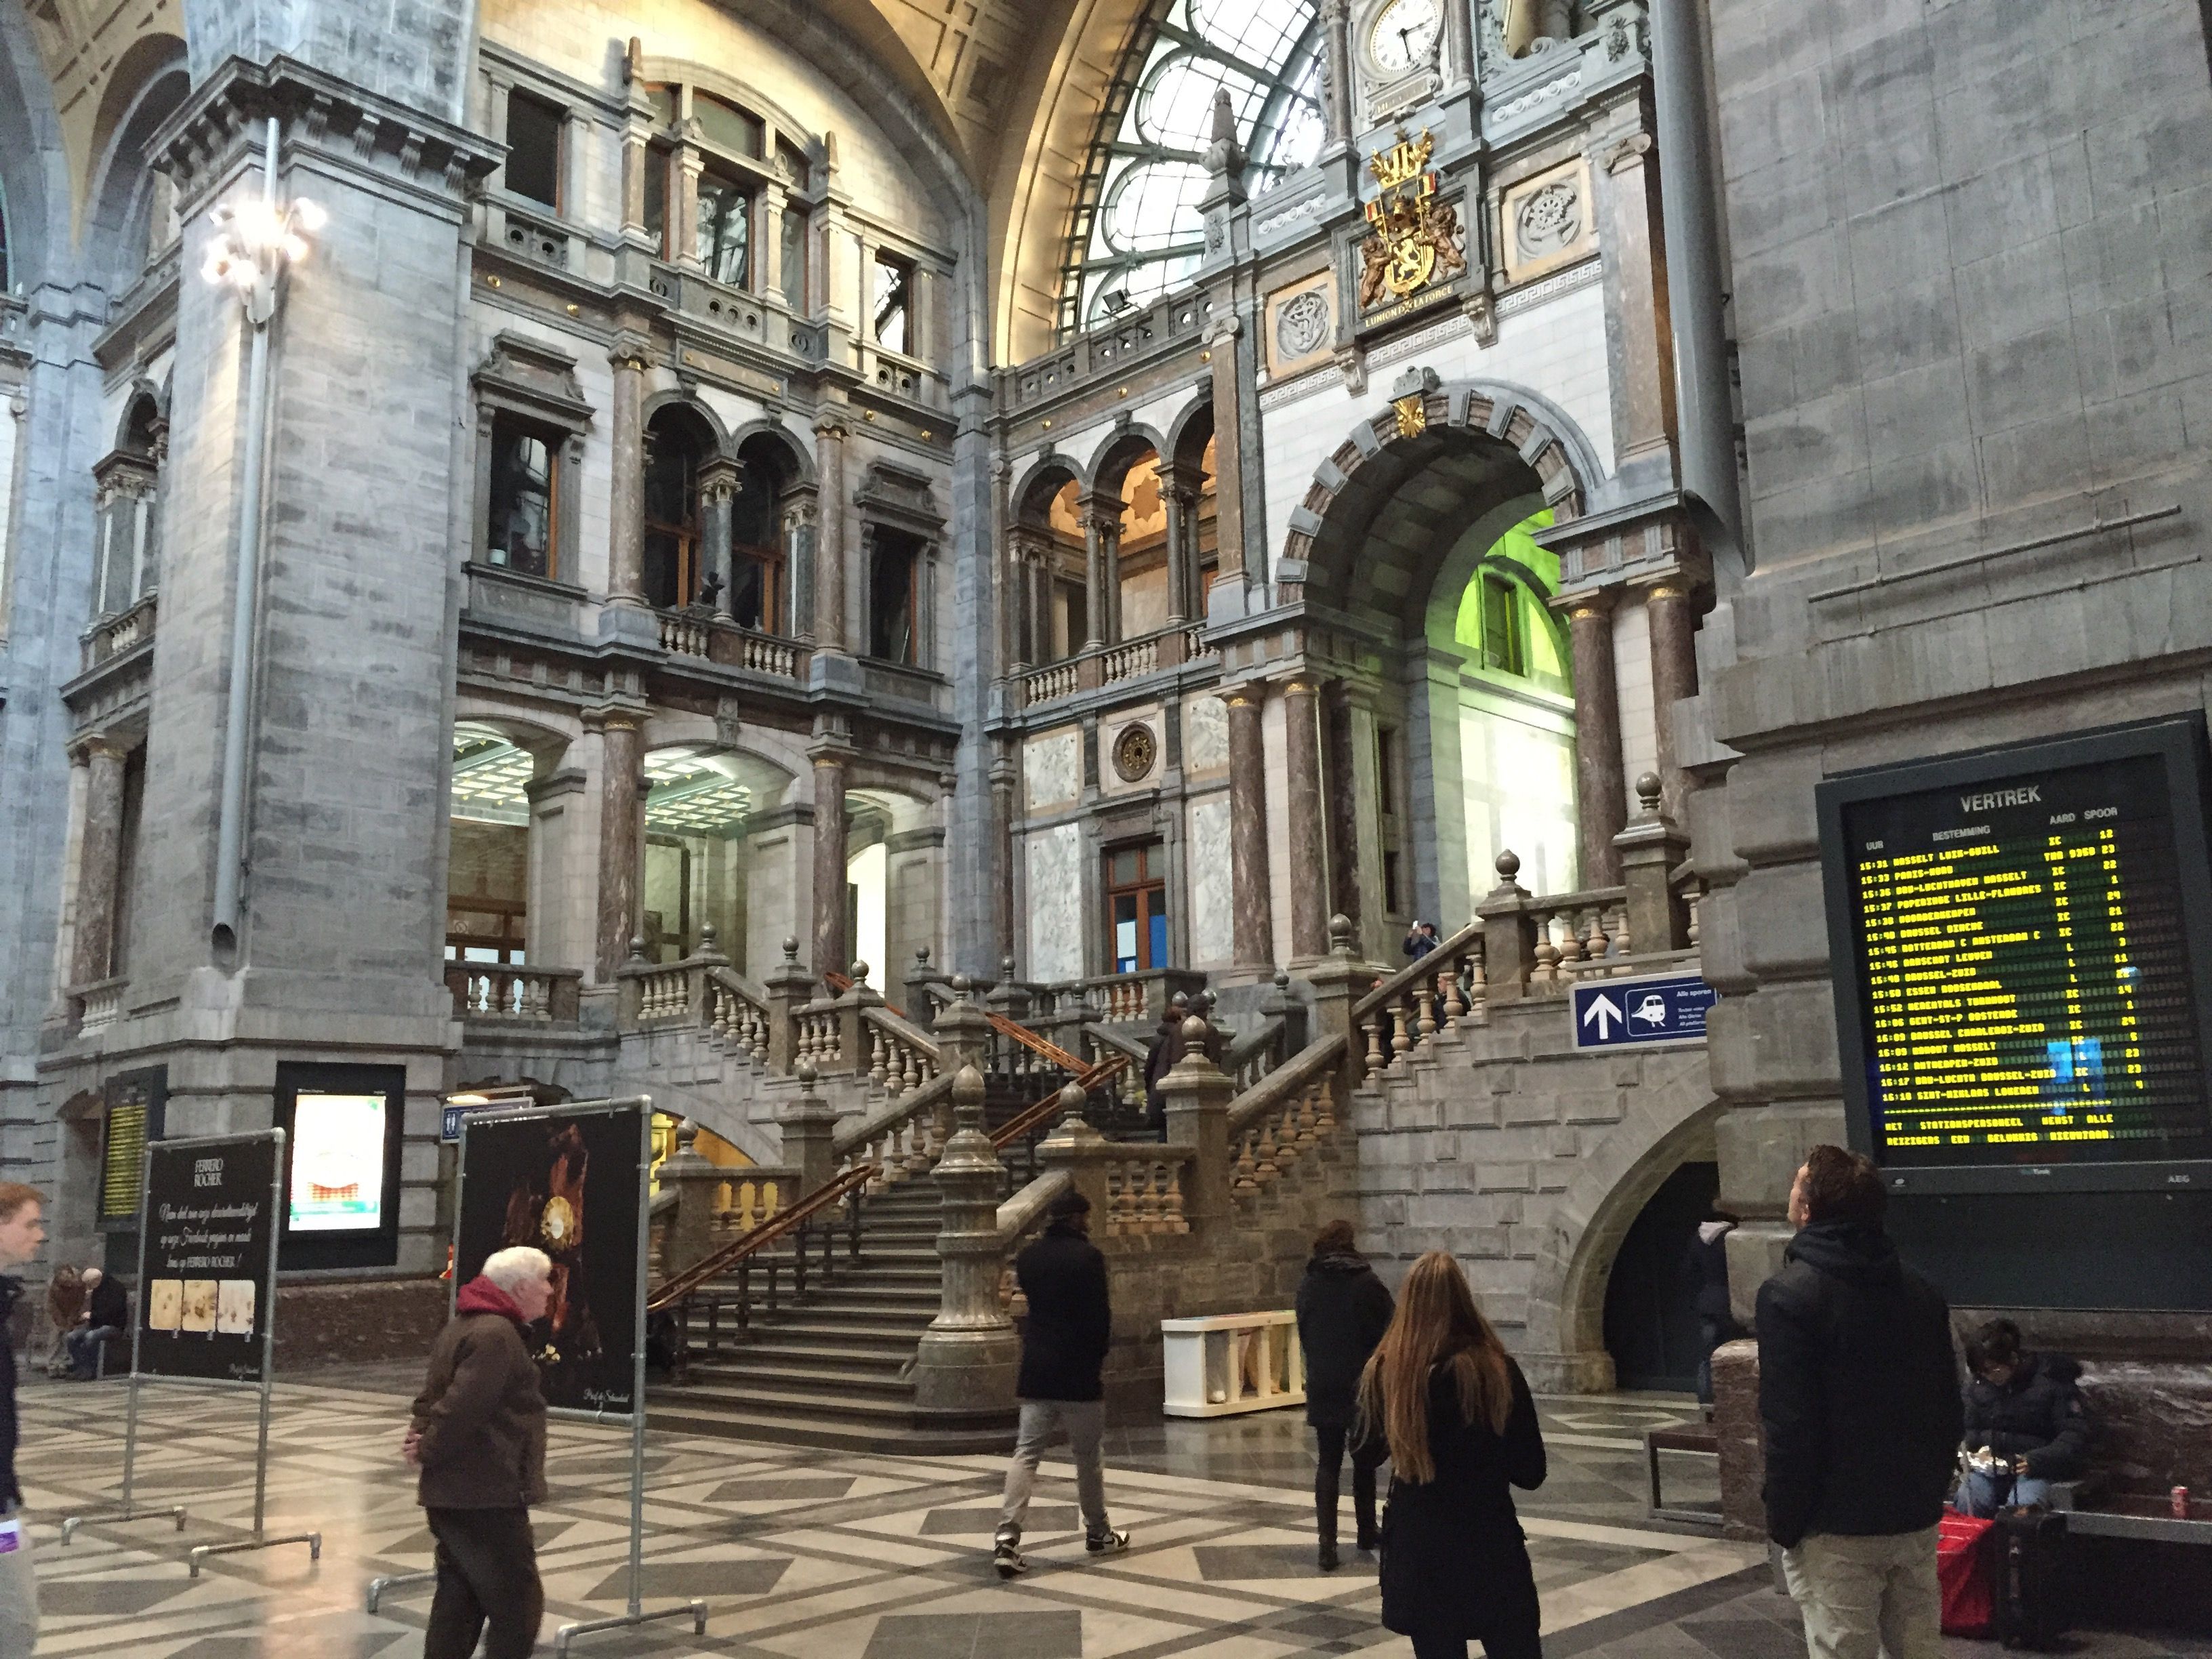 Antwerp train station entrance.